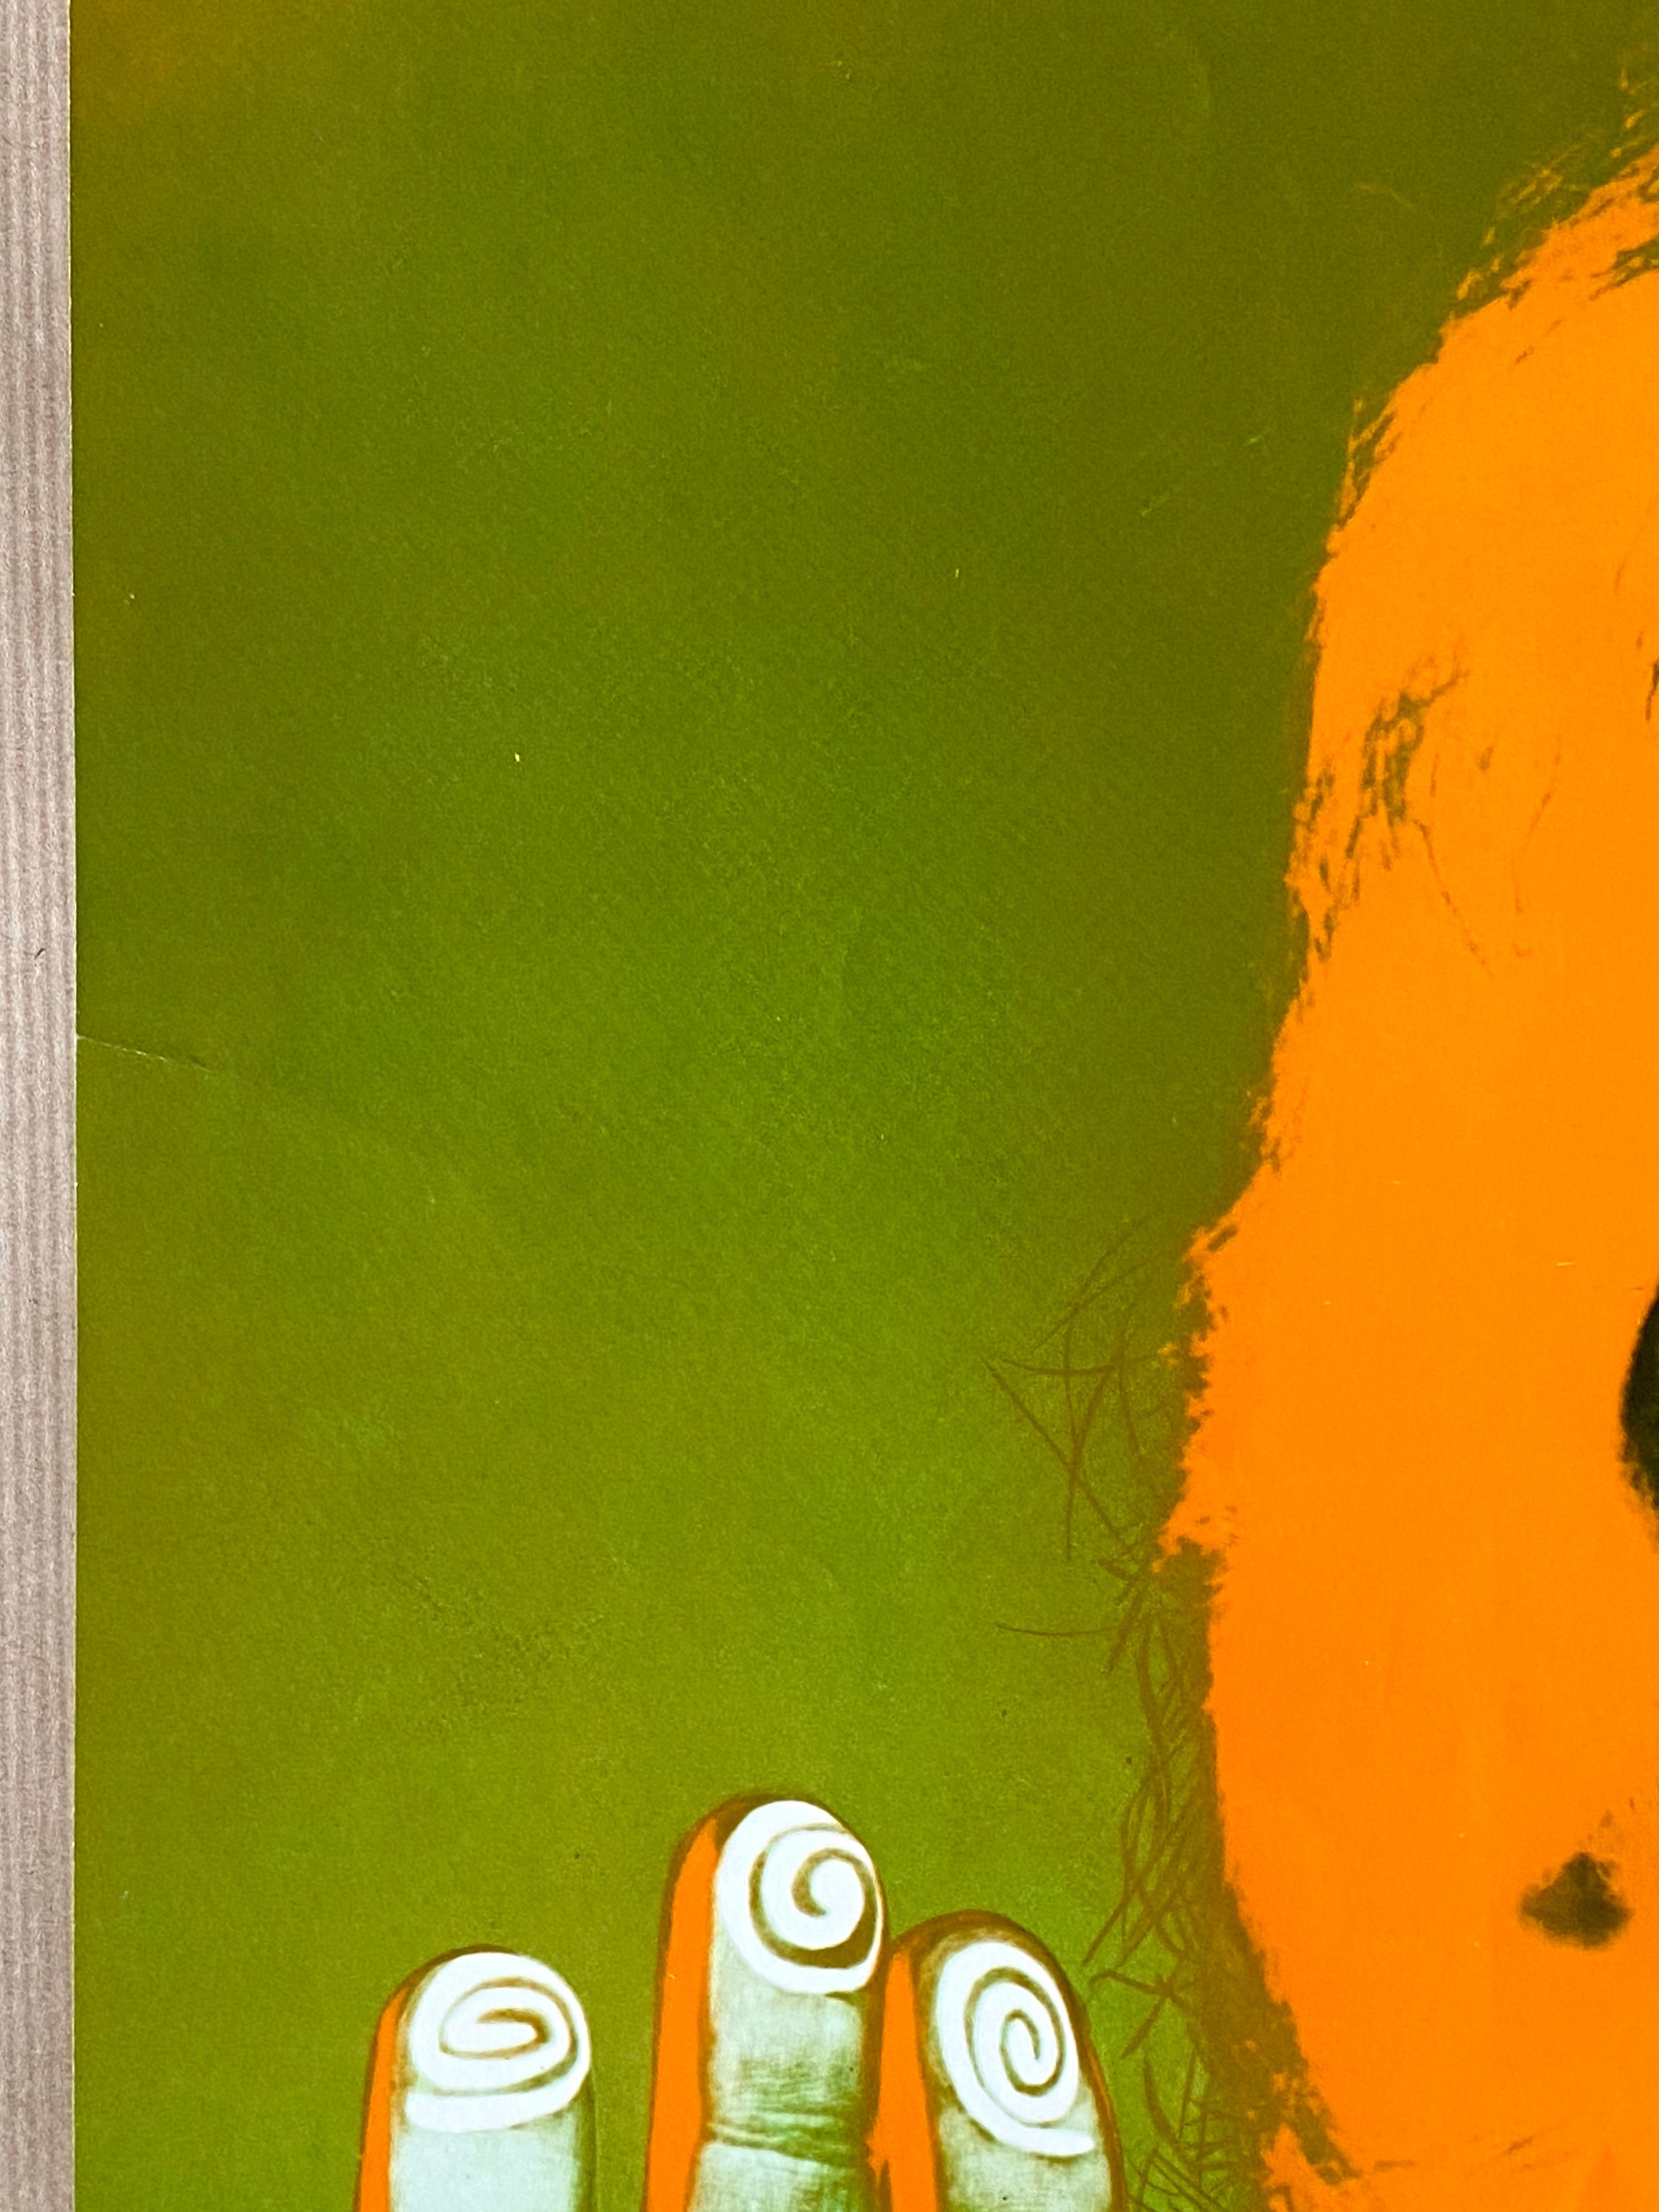 George Harrison Original Vintage Poster by Richard Avedon, 1967 For Sale 1